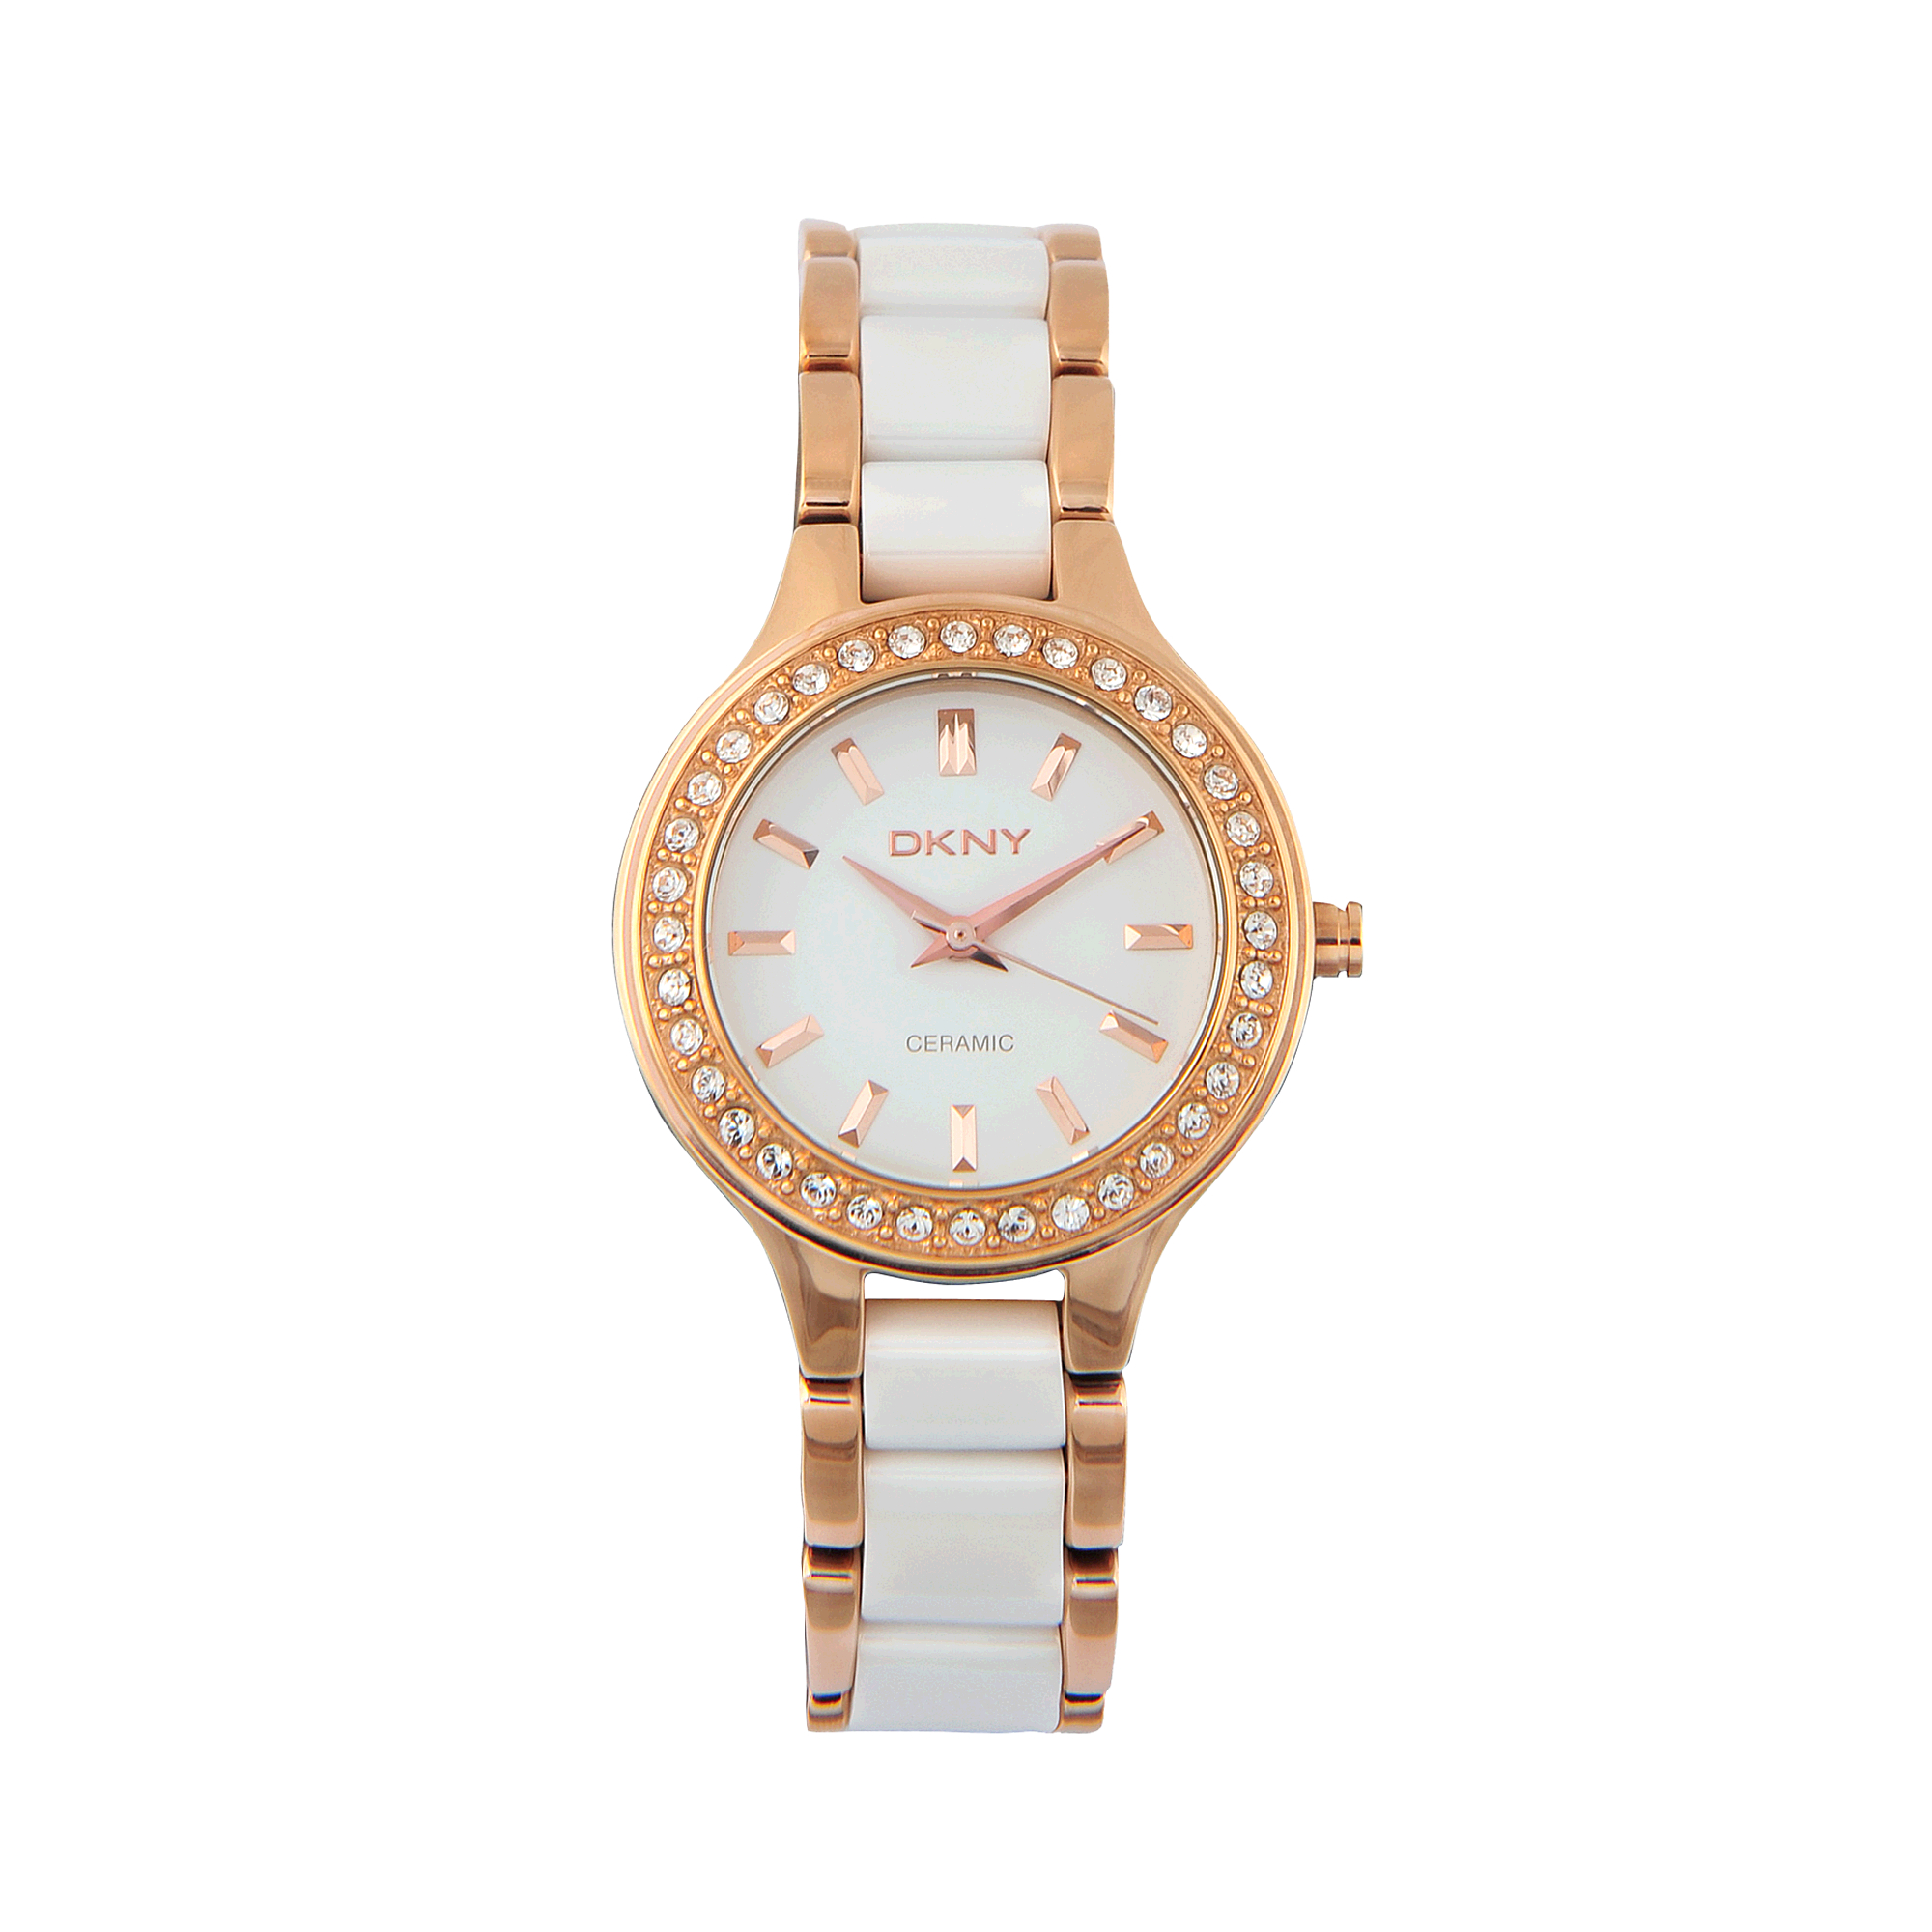 Lyst - Dkny Ceramic Ny8141 Watch in Pink